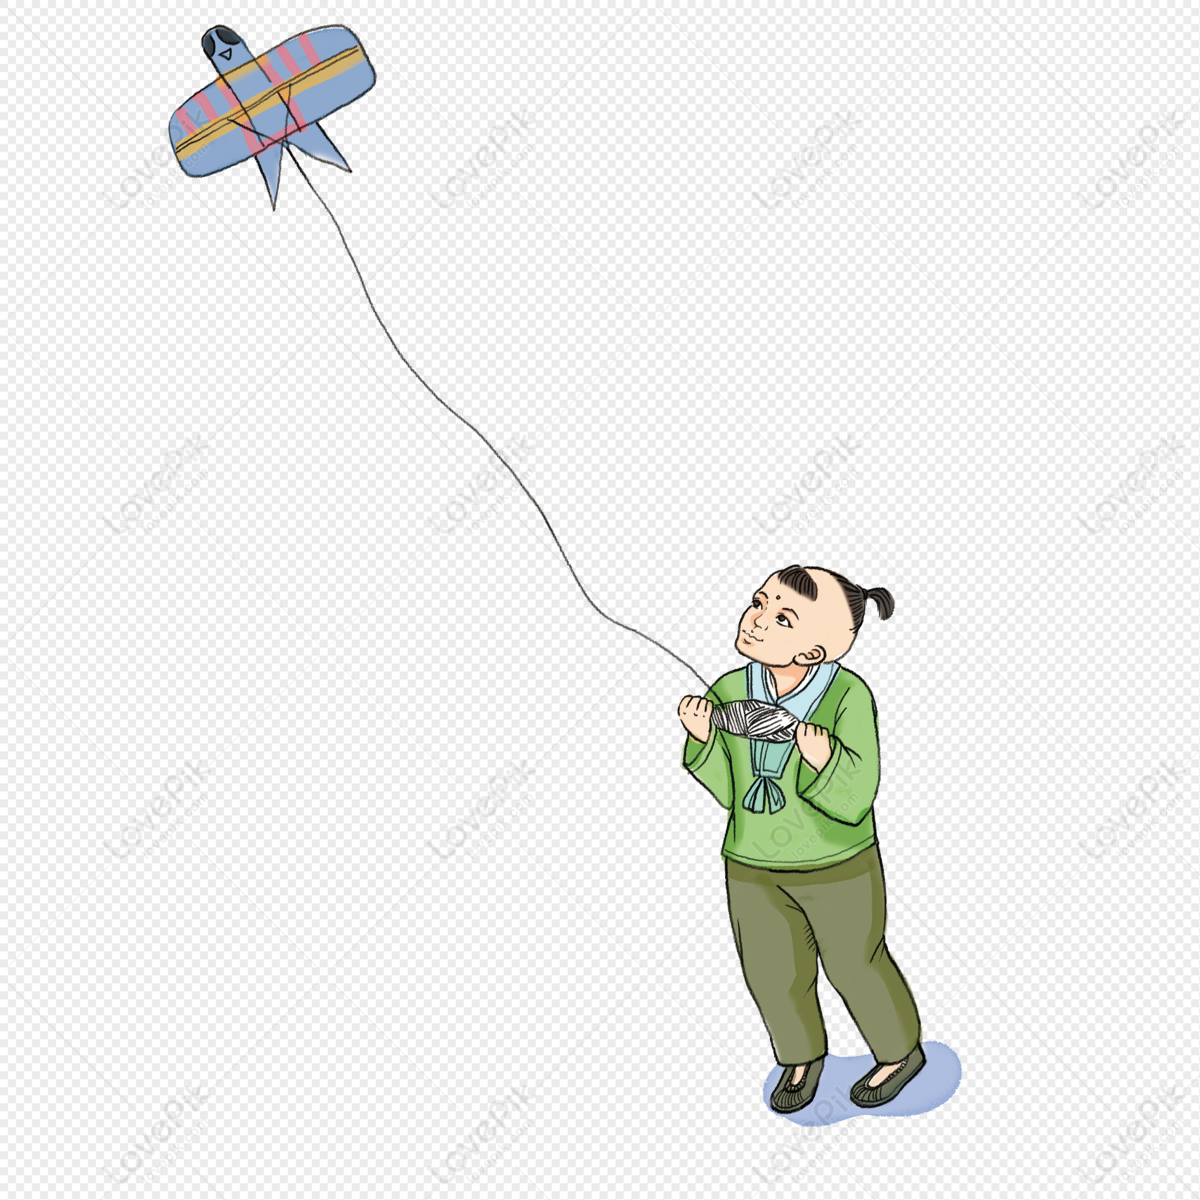 Child kite - Free Stock Illustrations | Creazilla